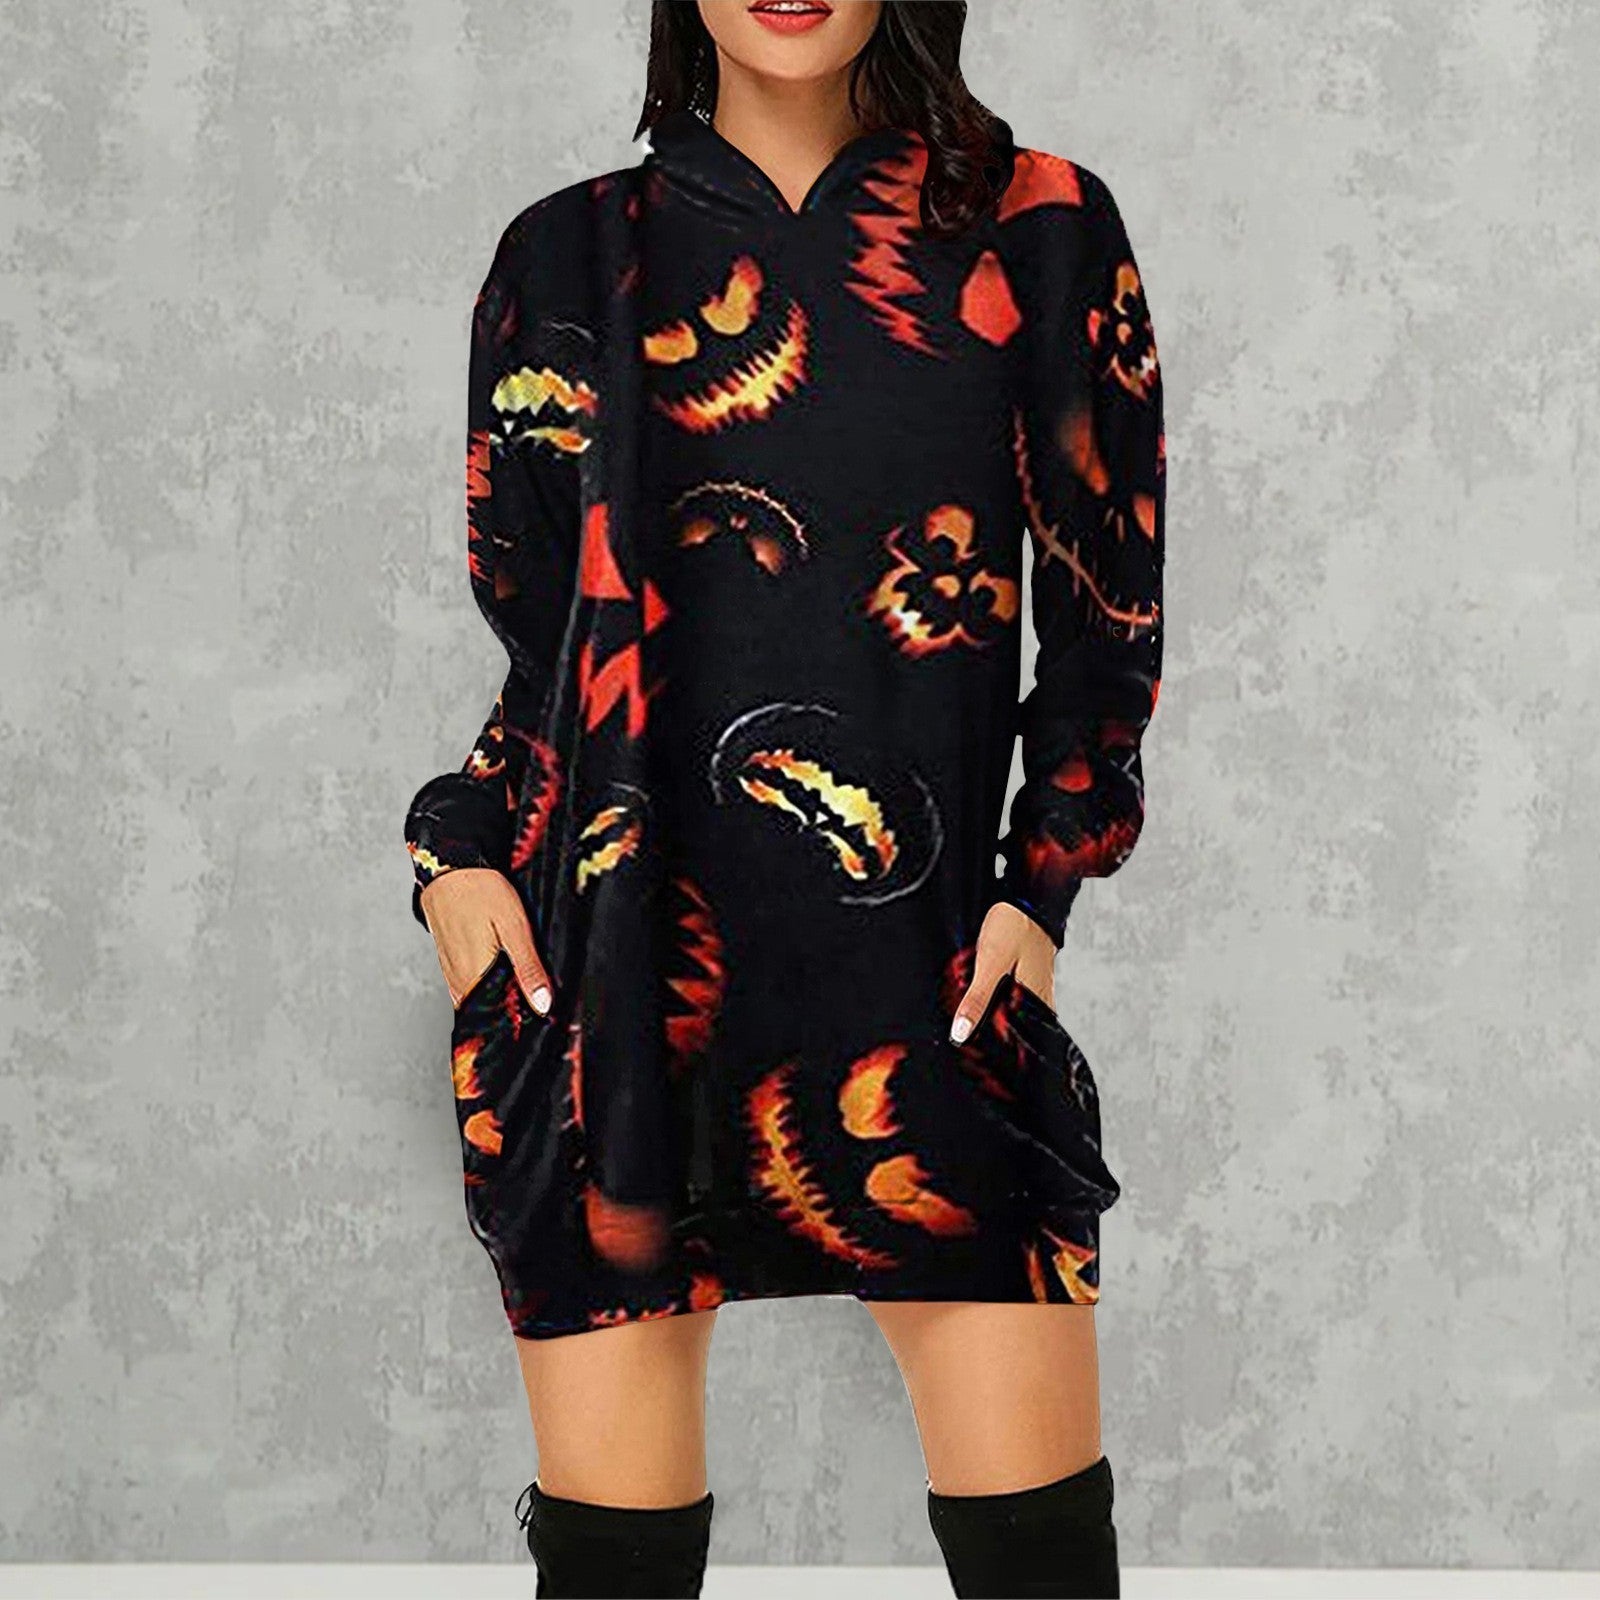 Halloween Pumpkin Design Long Sleeves Hoodies for Women-Black Grimace-S-Free Shipping at meselling99